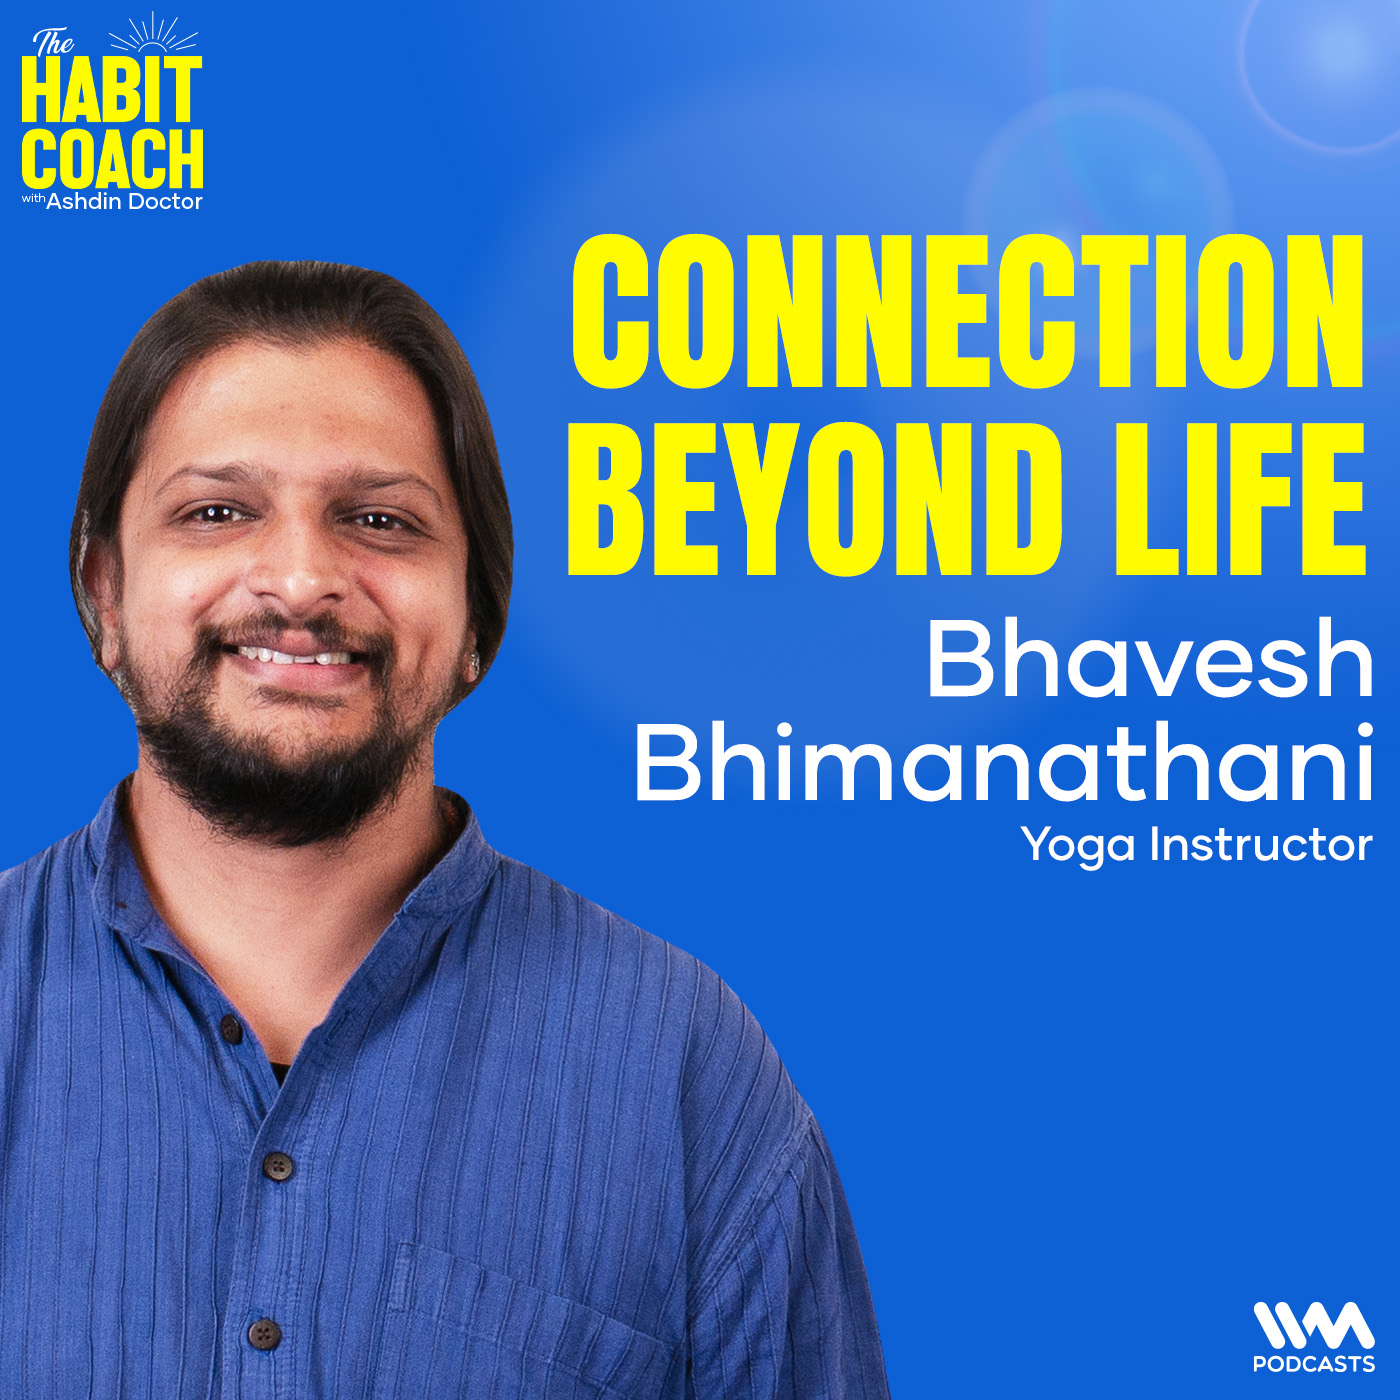 Bhavesh Bhimanathani: Connection Beyond Life - Yoga Instructor